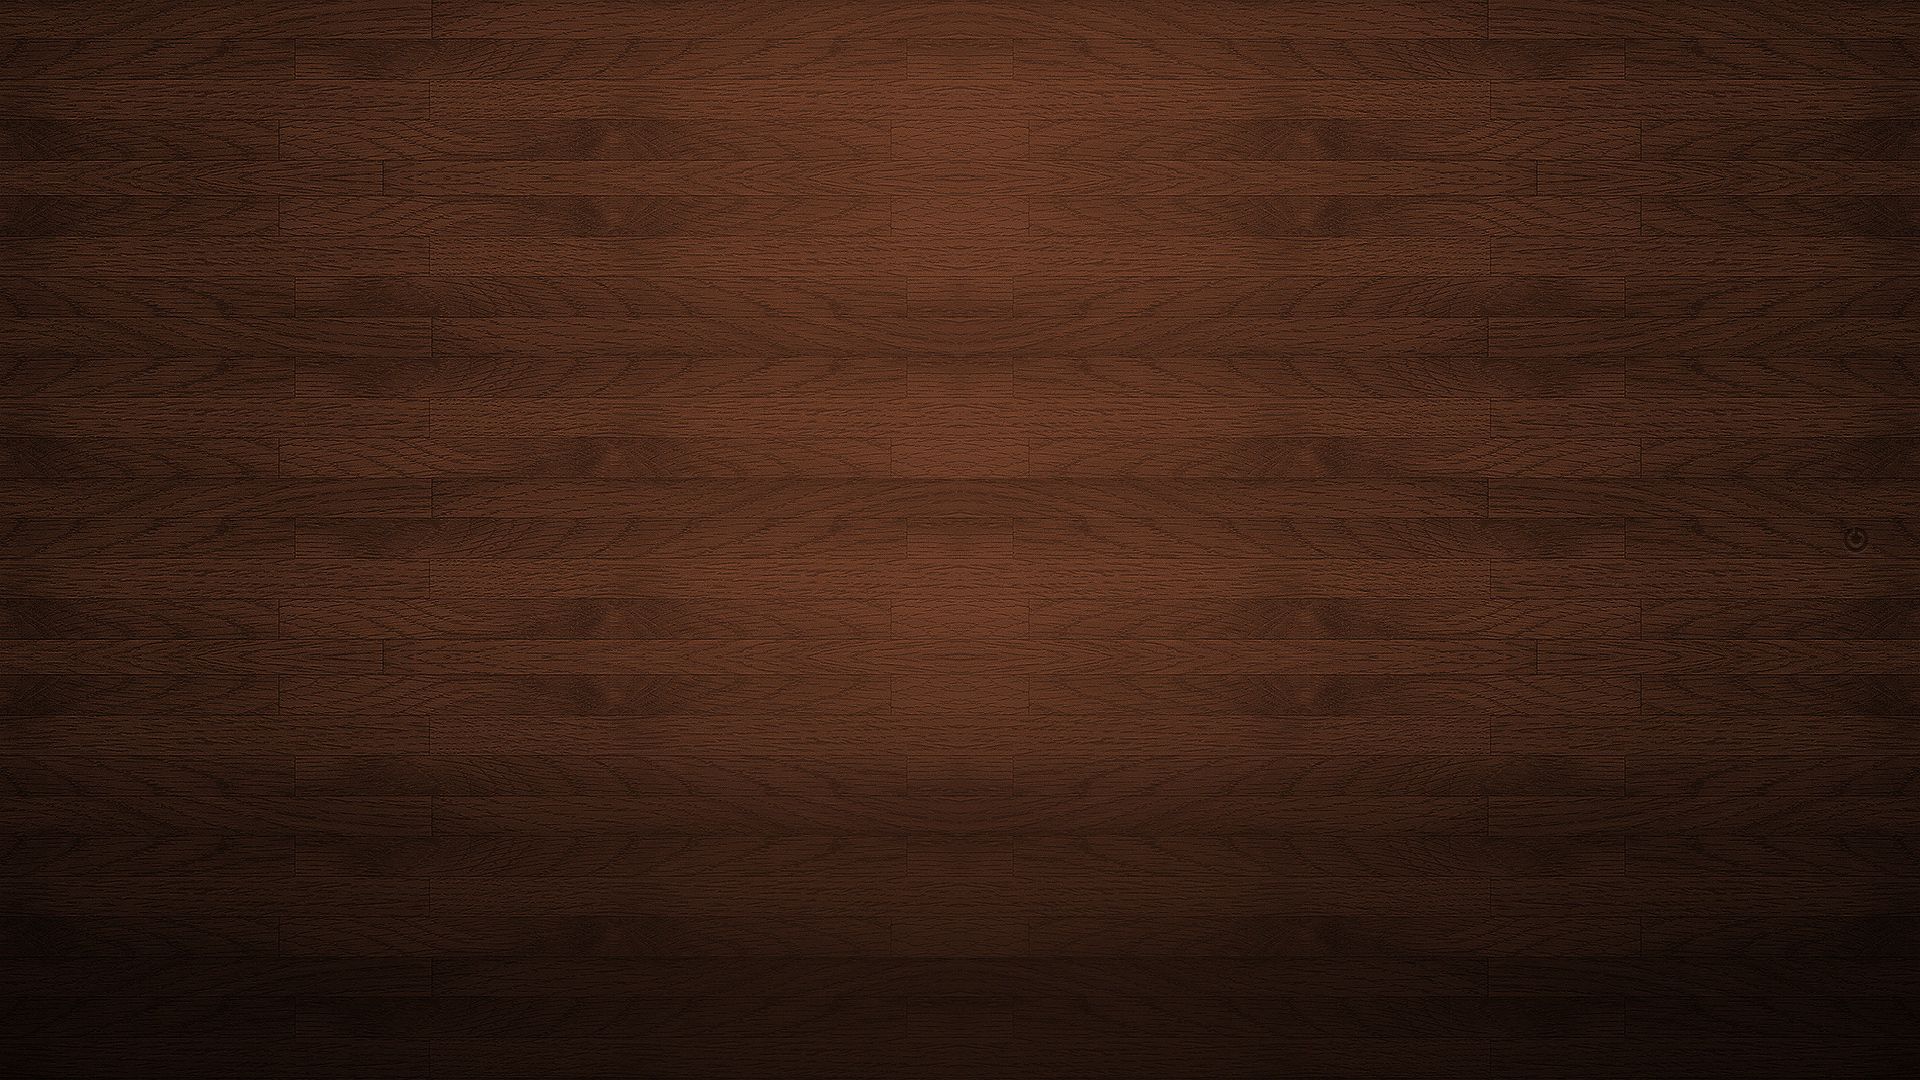 wood, wooden, dark, shadow, board, texture, textures, surface